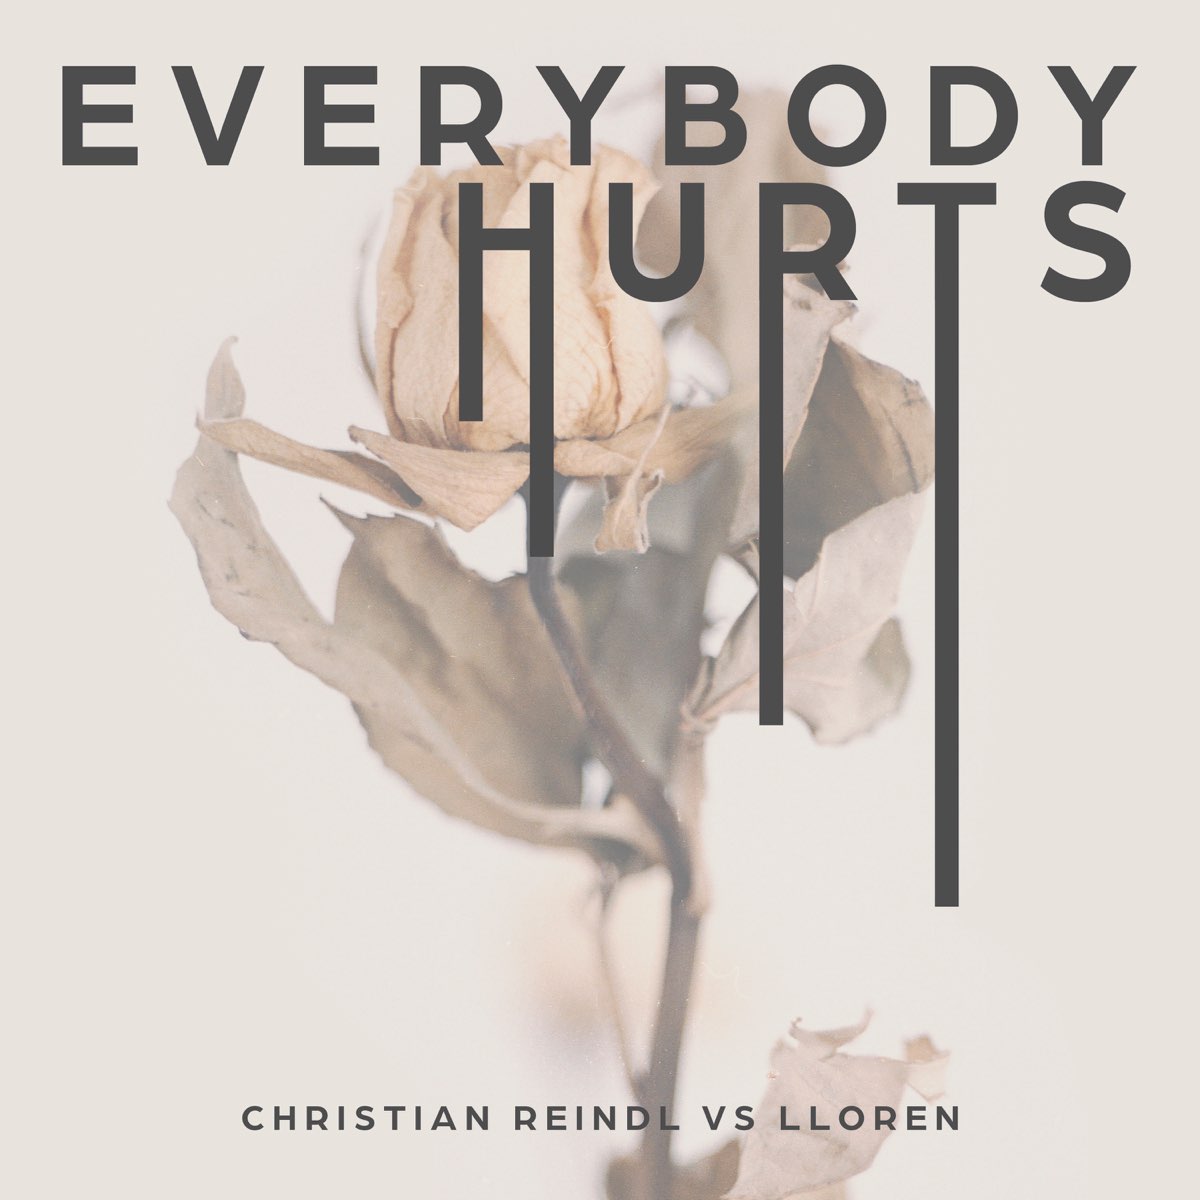 Everybody hurts. Christian Reindl. R.E.M. - Everybody hurts. Песня Everybody hurts. Obscura Power-haus, Christian Reindl.